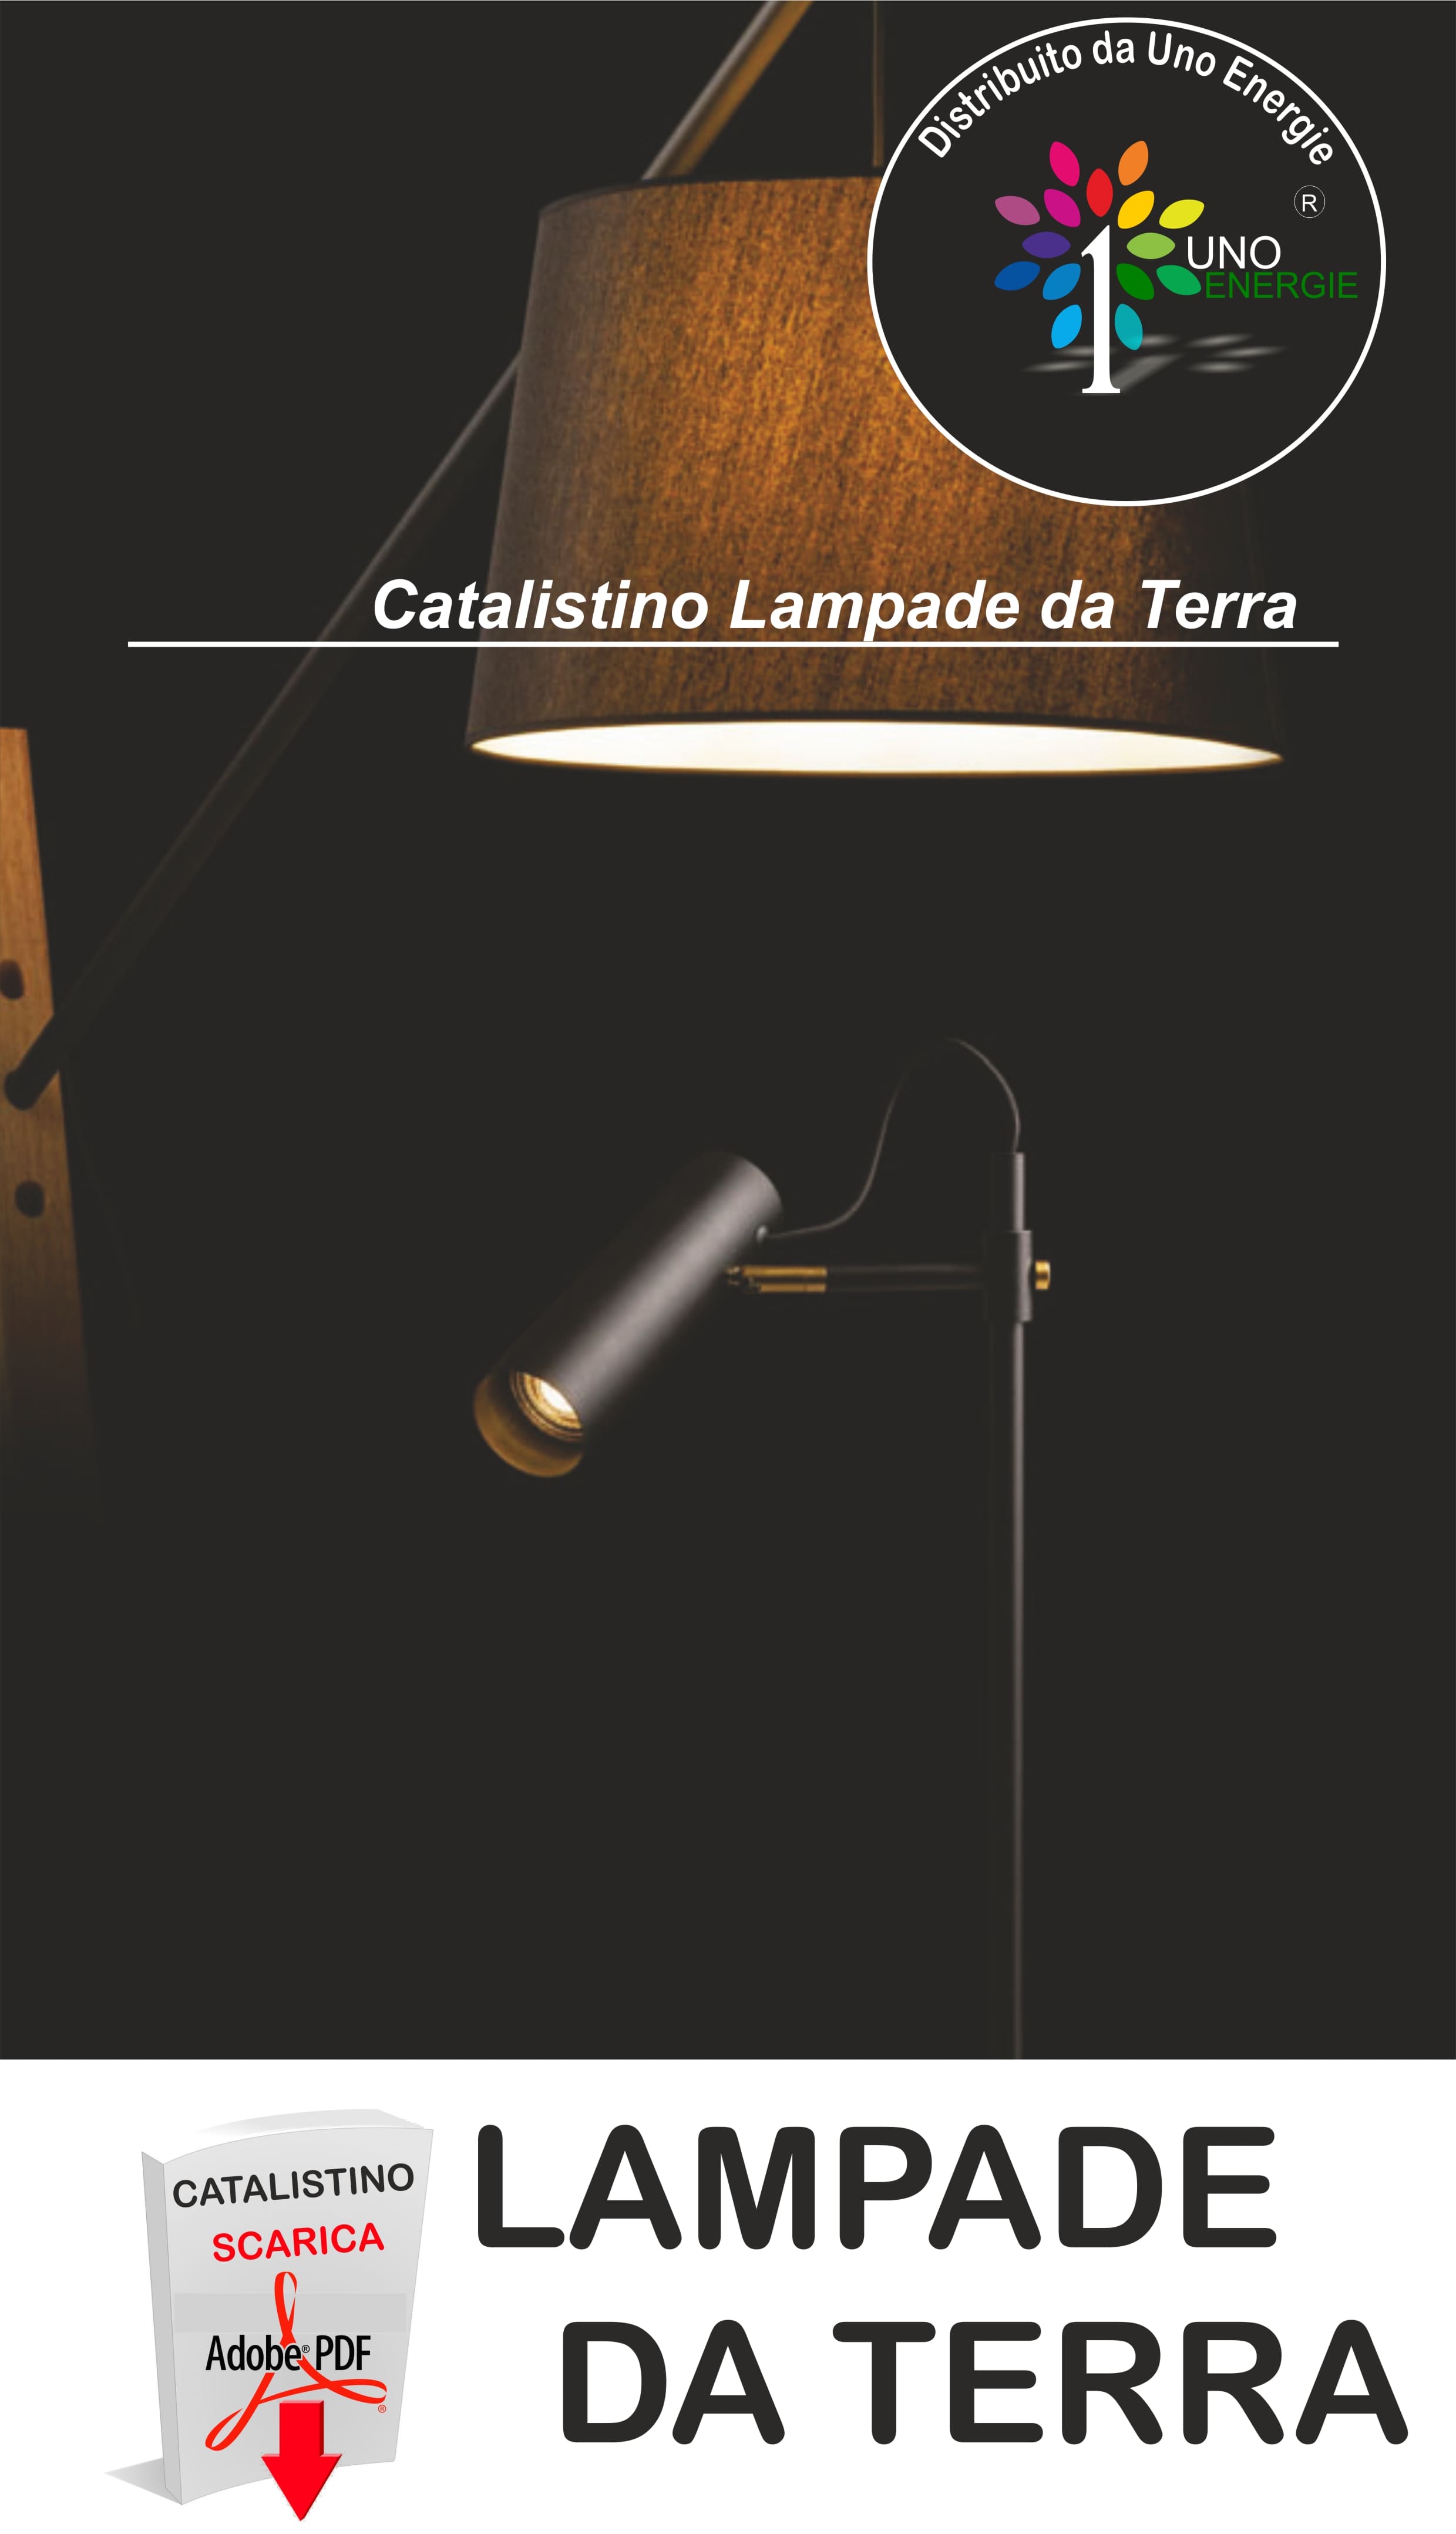 LAMPADE DA TERRA